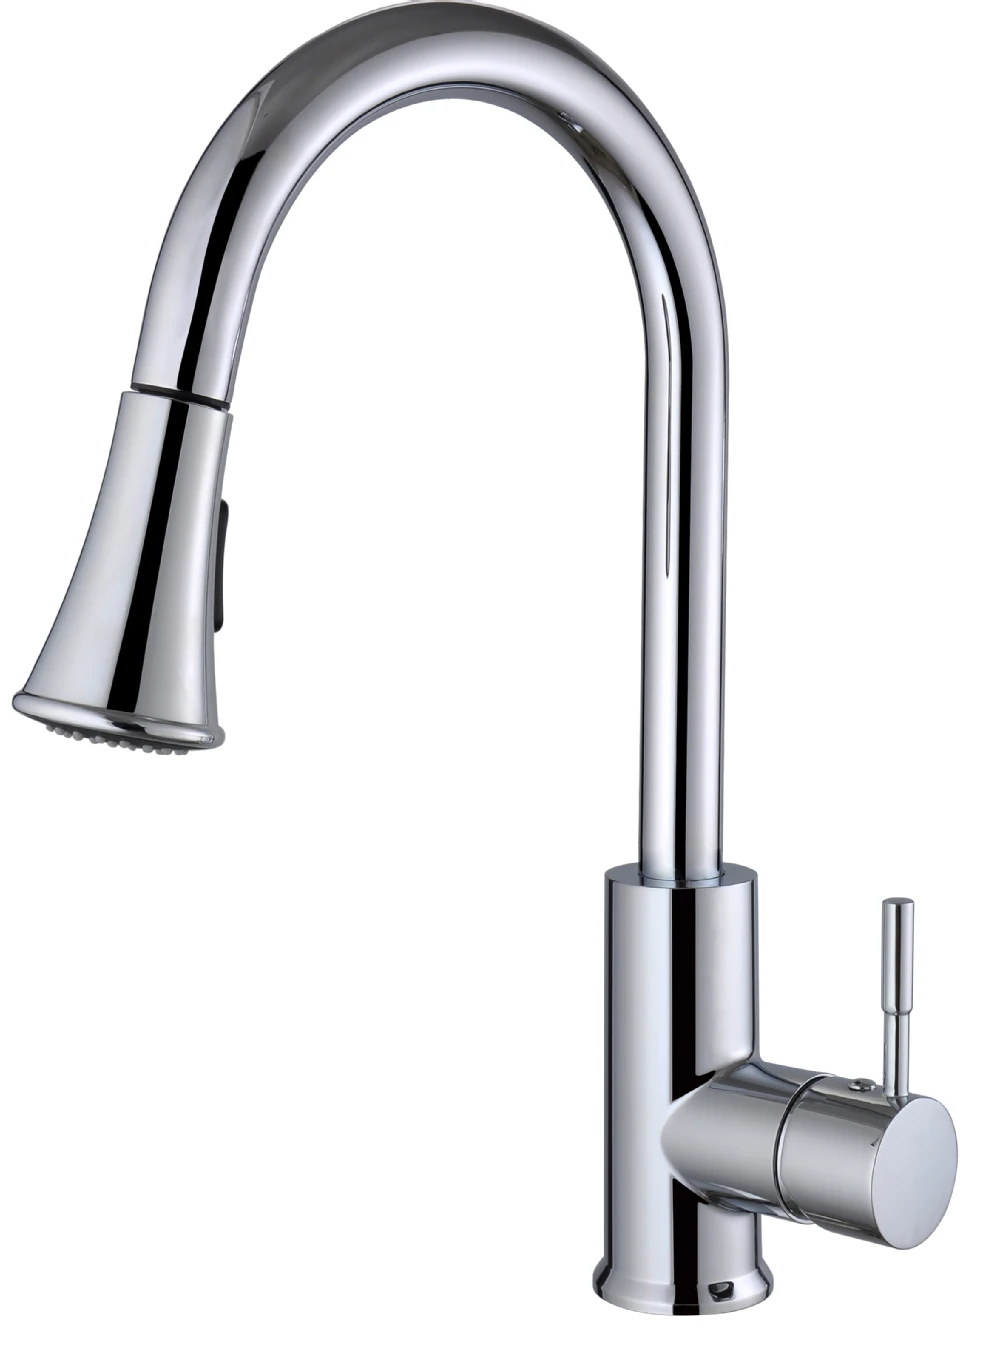 Kd1115 Industrial Single Handle Kitchen Faucet Buy Kitchen Faucet